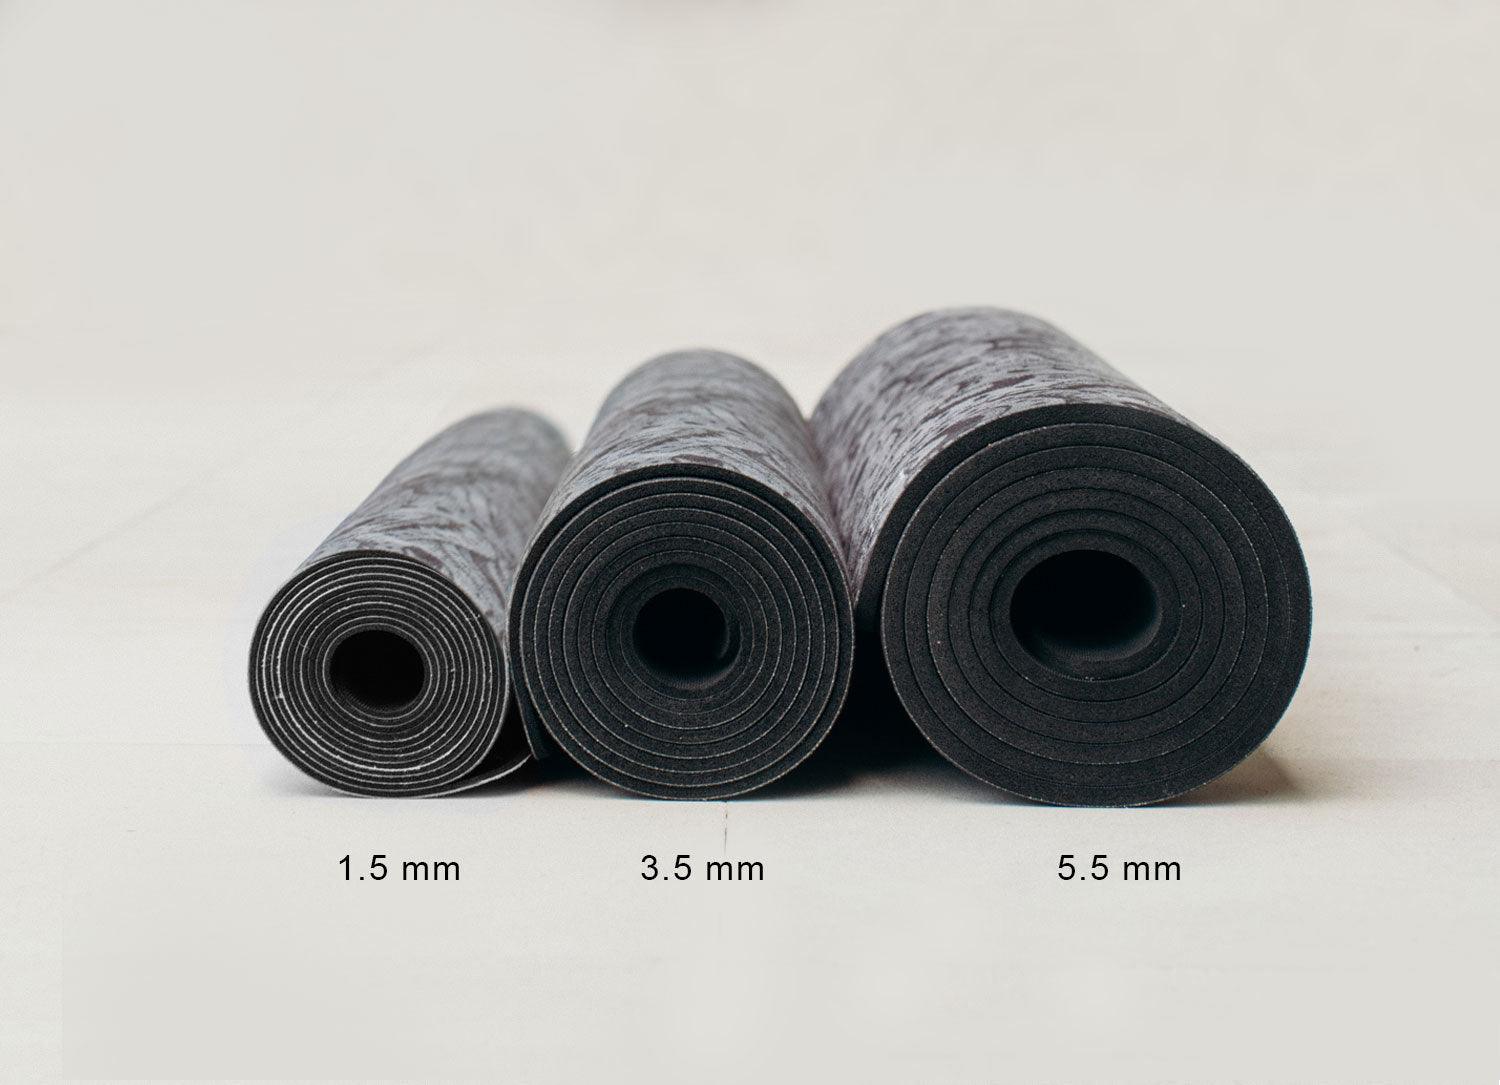 Combo Yoga Mat: 2-in-1 (Mat + Towel) - Geo - Lightweight, Ultra-Soft - Yoga Design Lab 